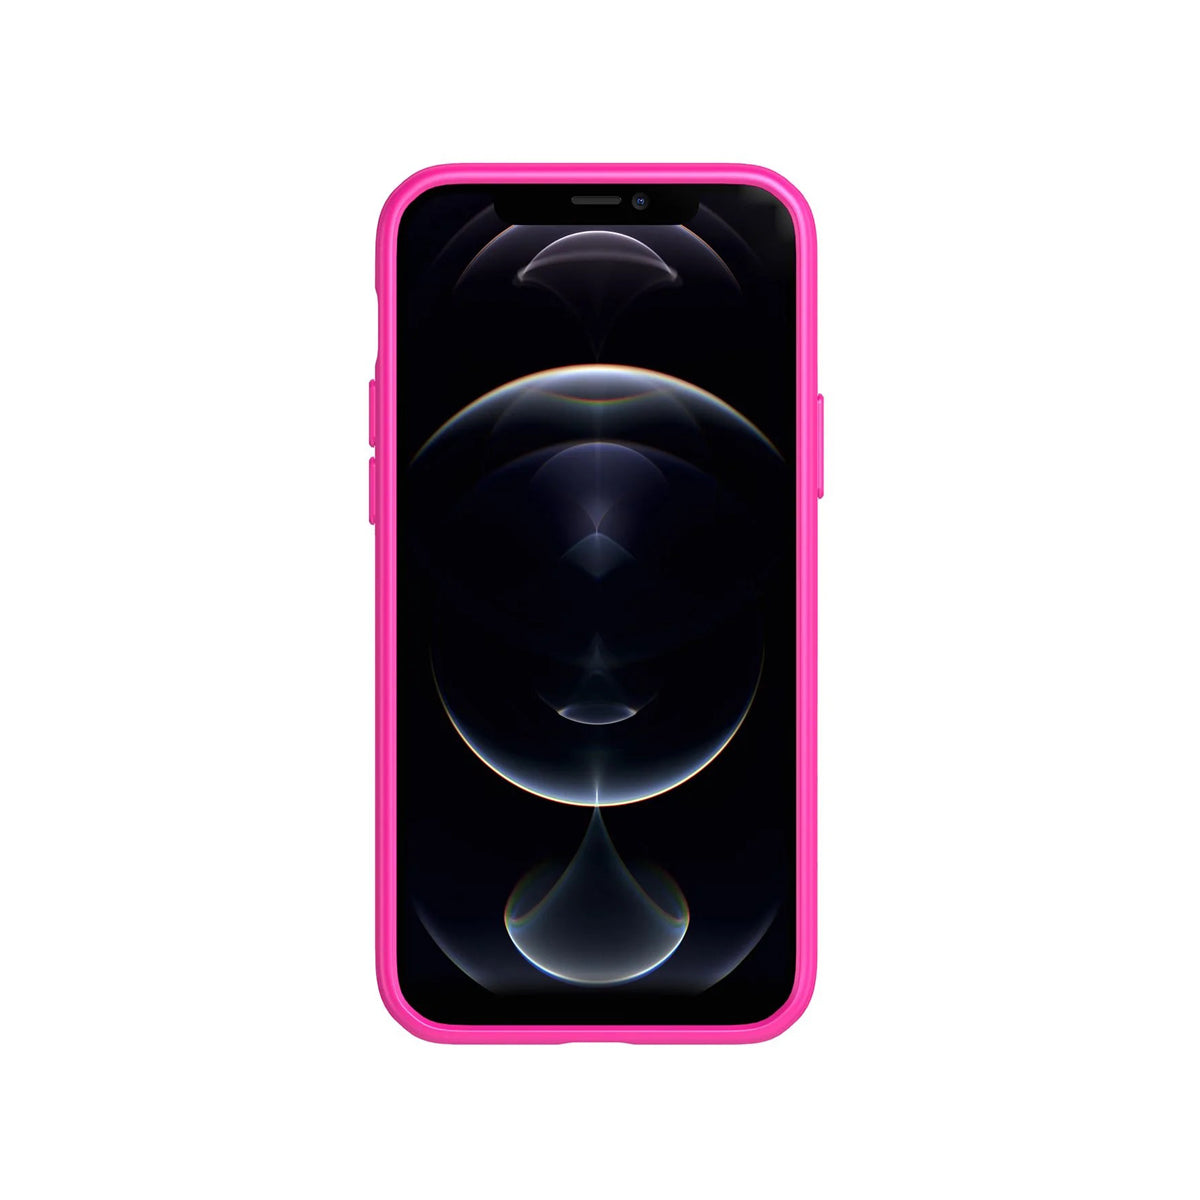 Tech21 Evo Slim Phone Case for Apple iPhone 12/12 Pro - Midnight Green.